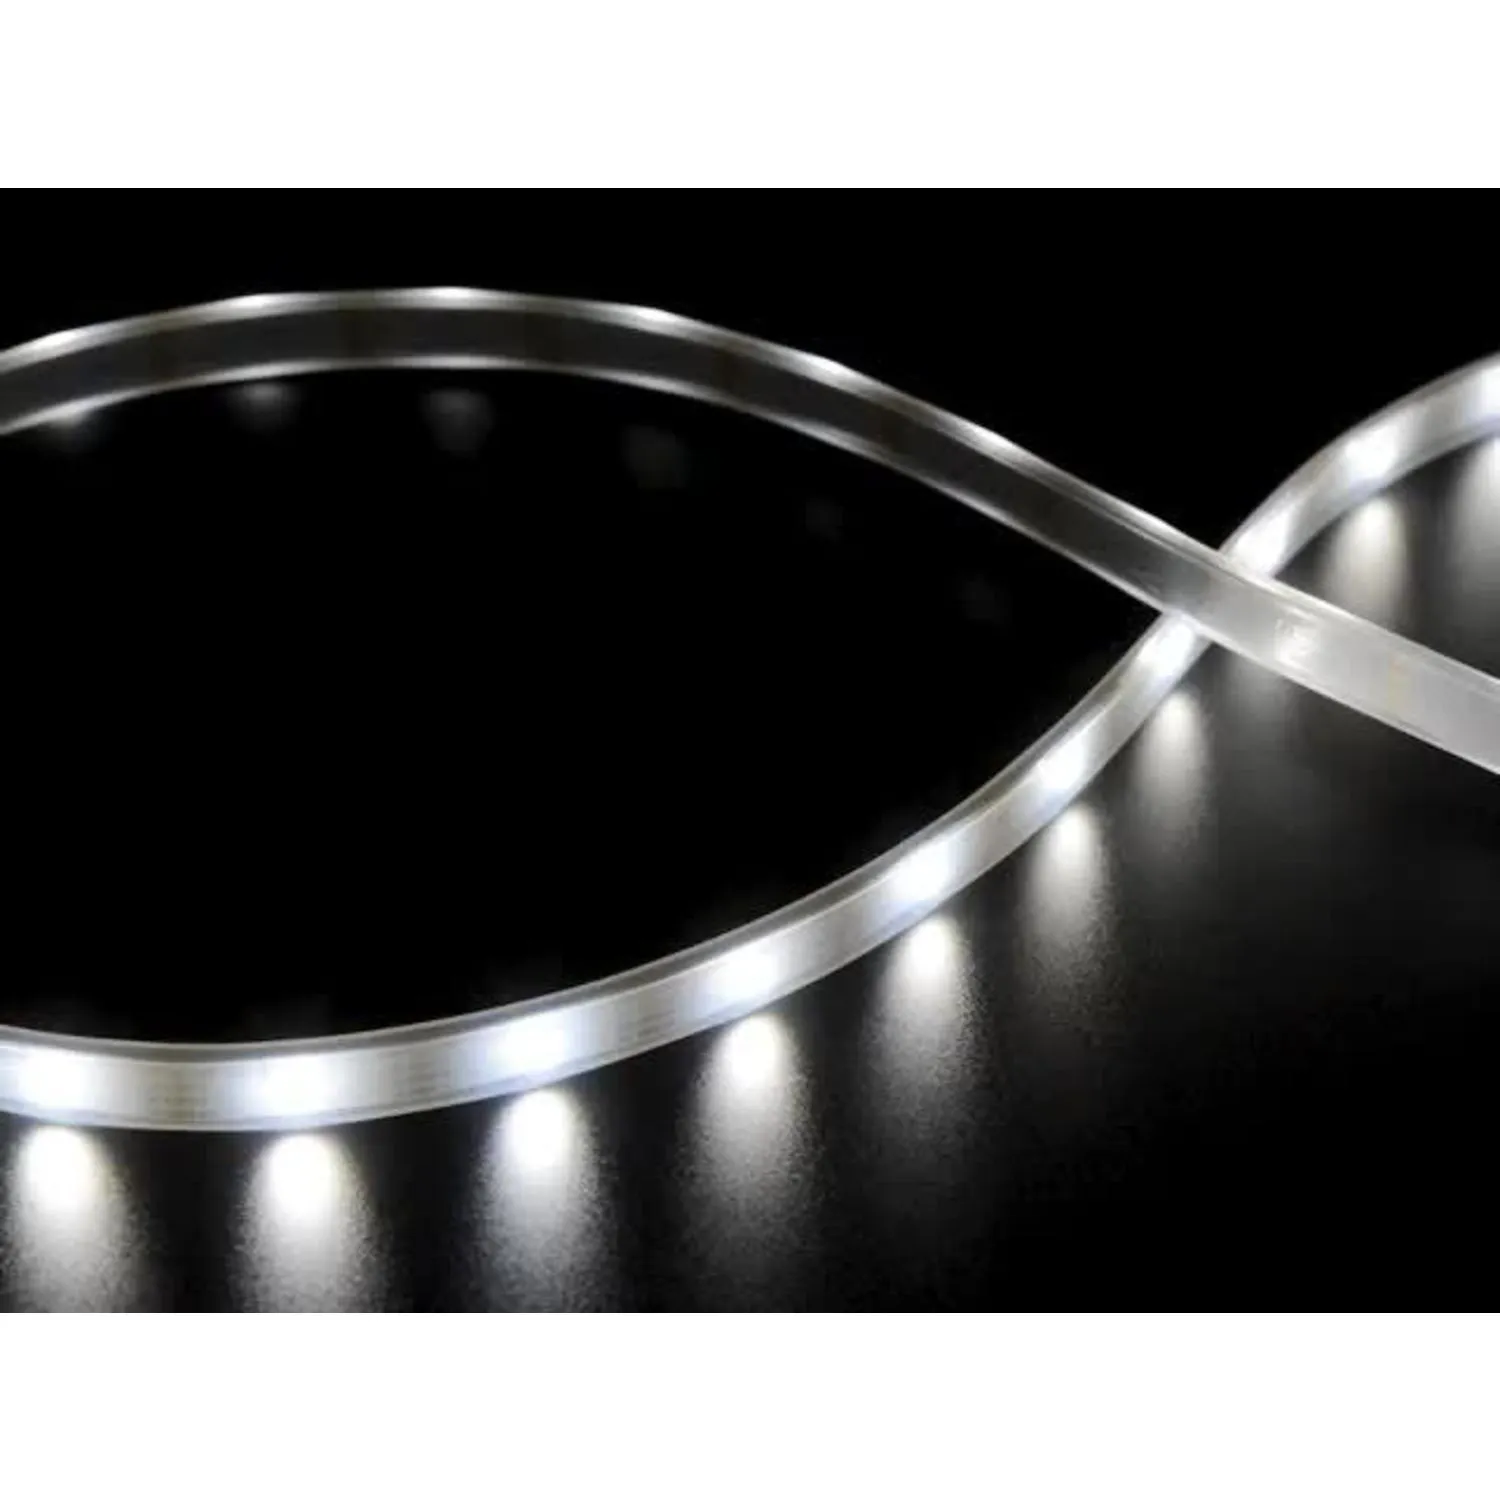 Photo of Adafruit DotStar LED Strip - APA102 Warm White - 144 LED/m [~3000K - One Meter]